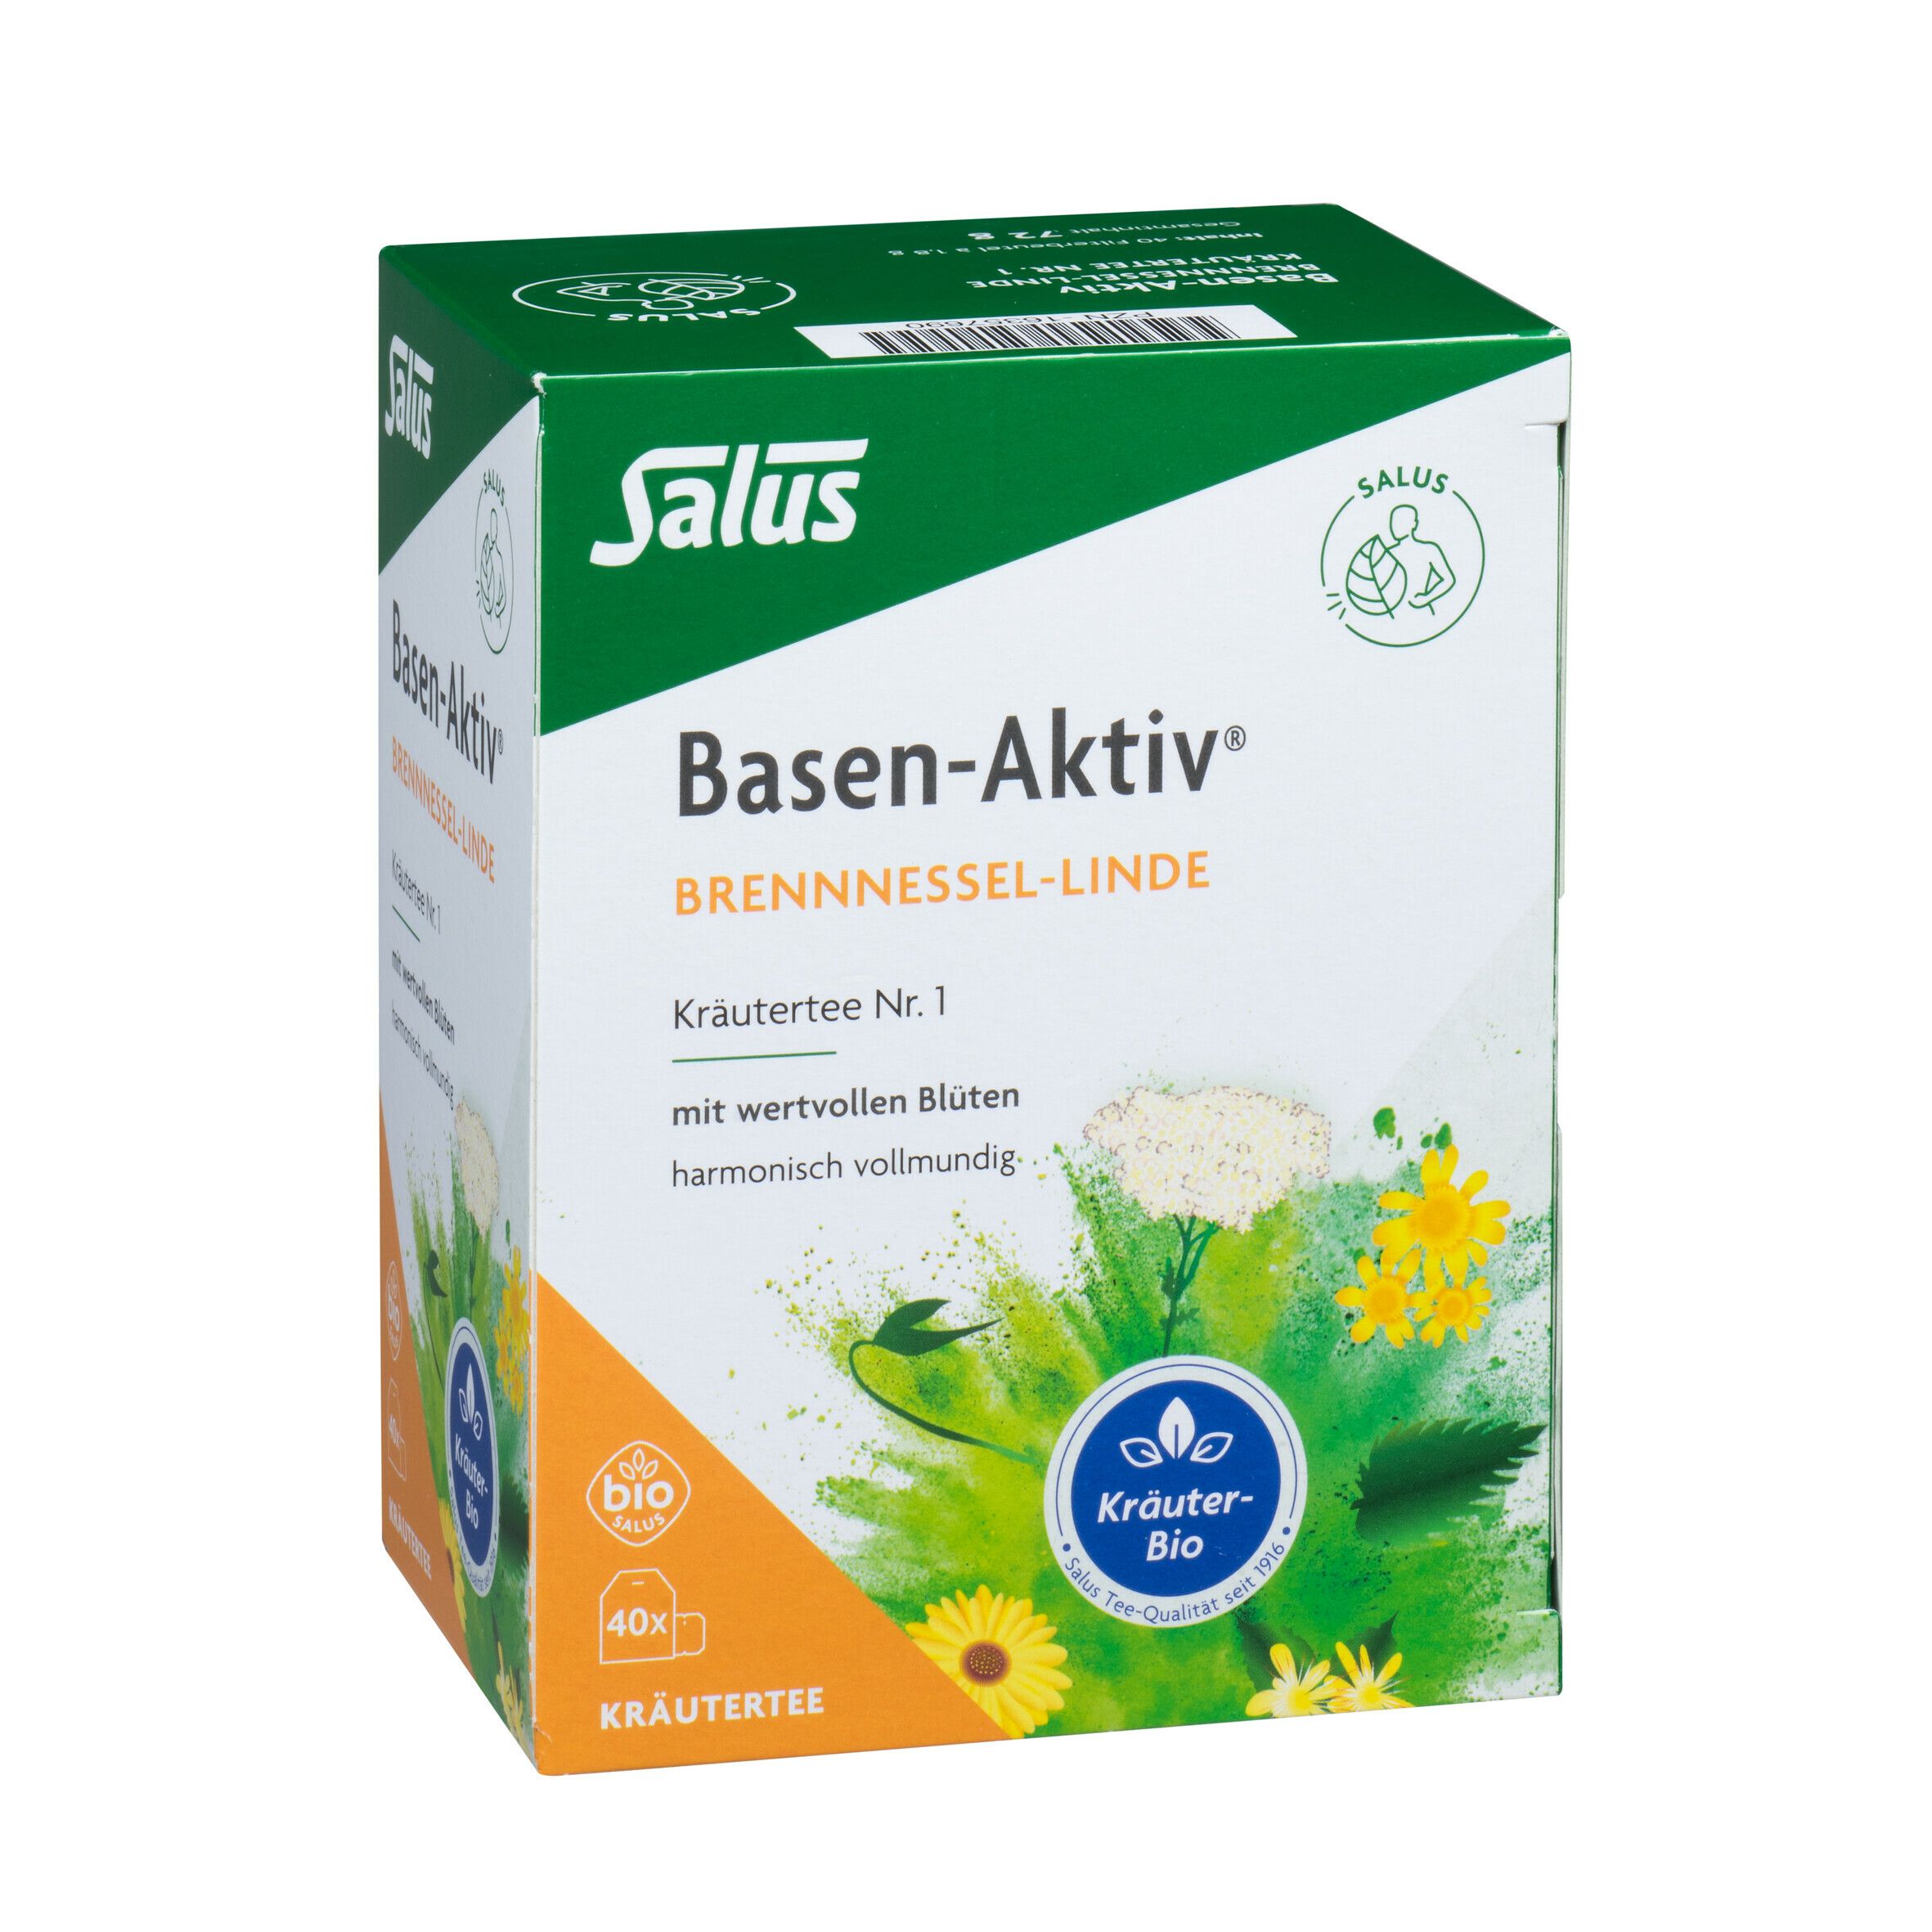 Basen-Aktiv® Kräutertee Nr. 1 Brennnessel-Linde